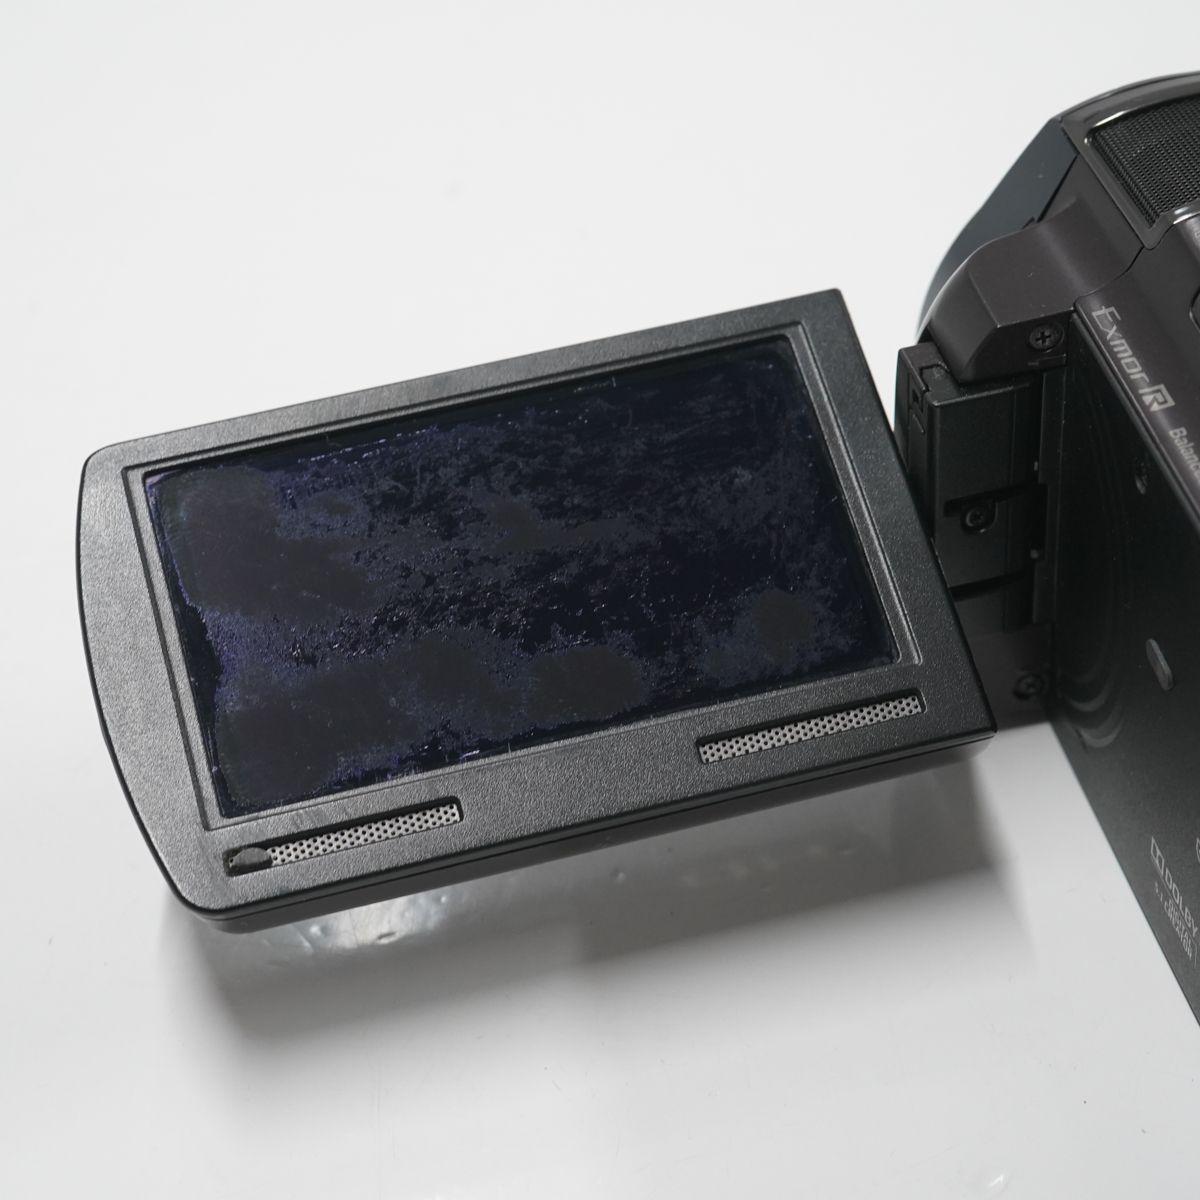 HDR-PJ630V SONY デジタルビデオカメラ HANDYCAM USED美品 HD 広角26mm